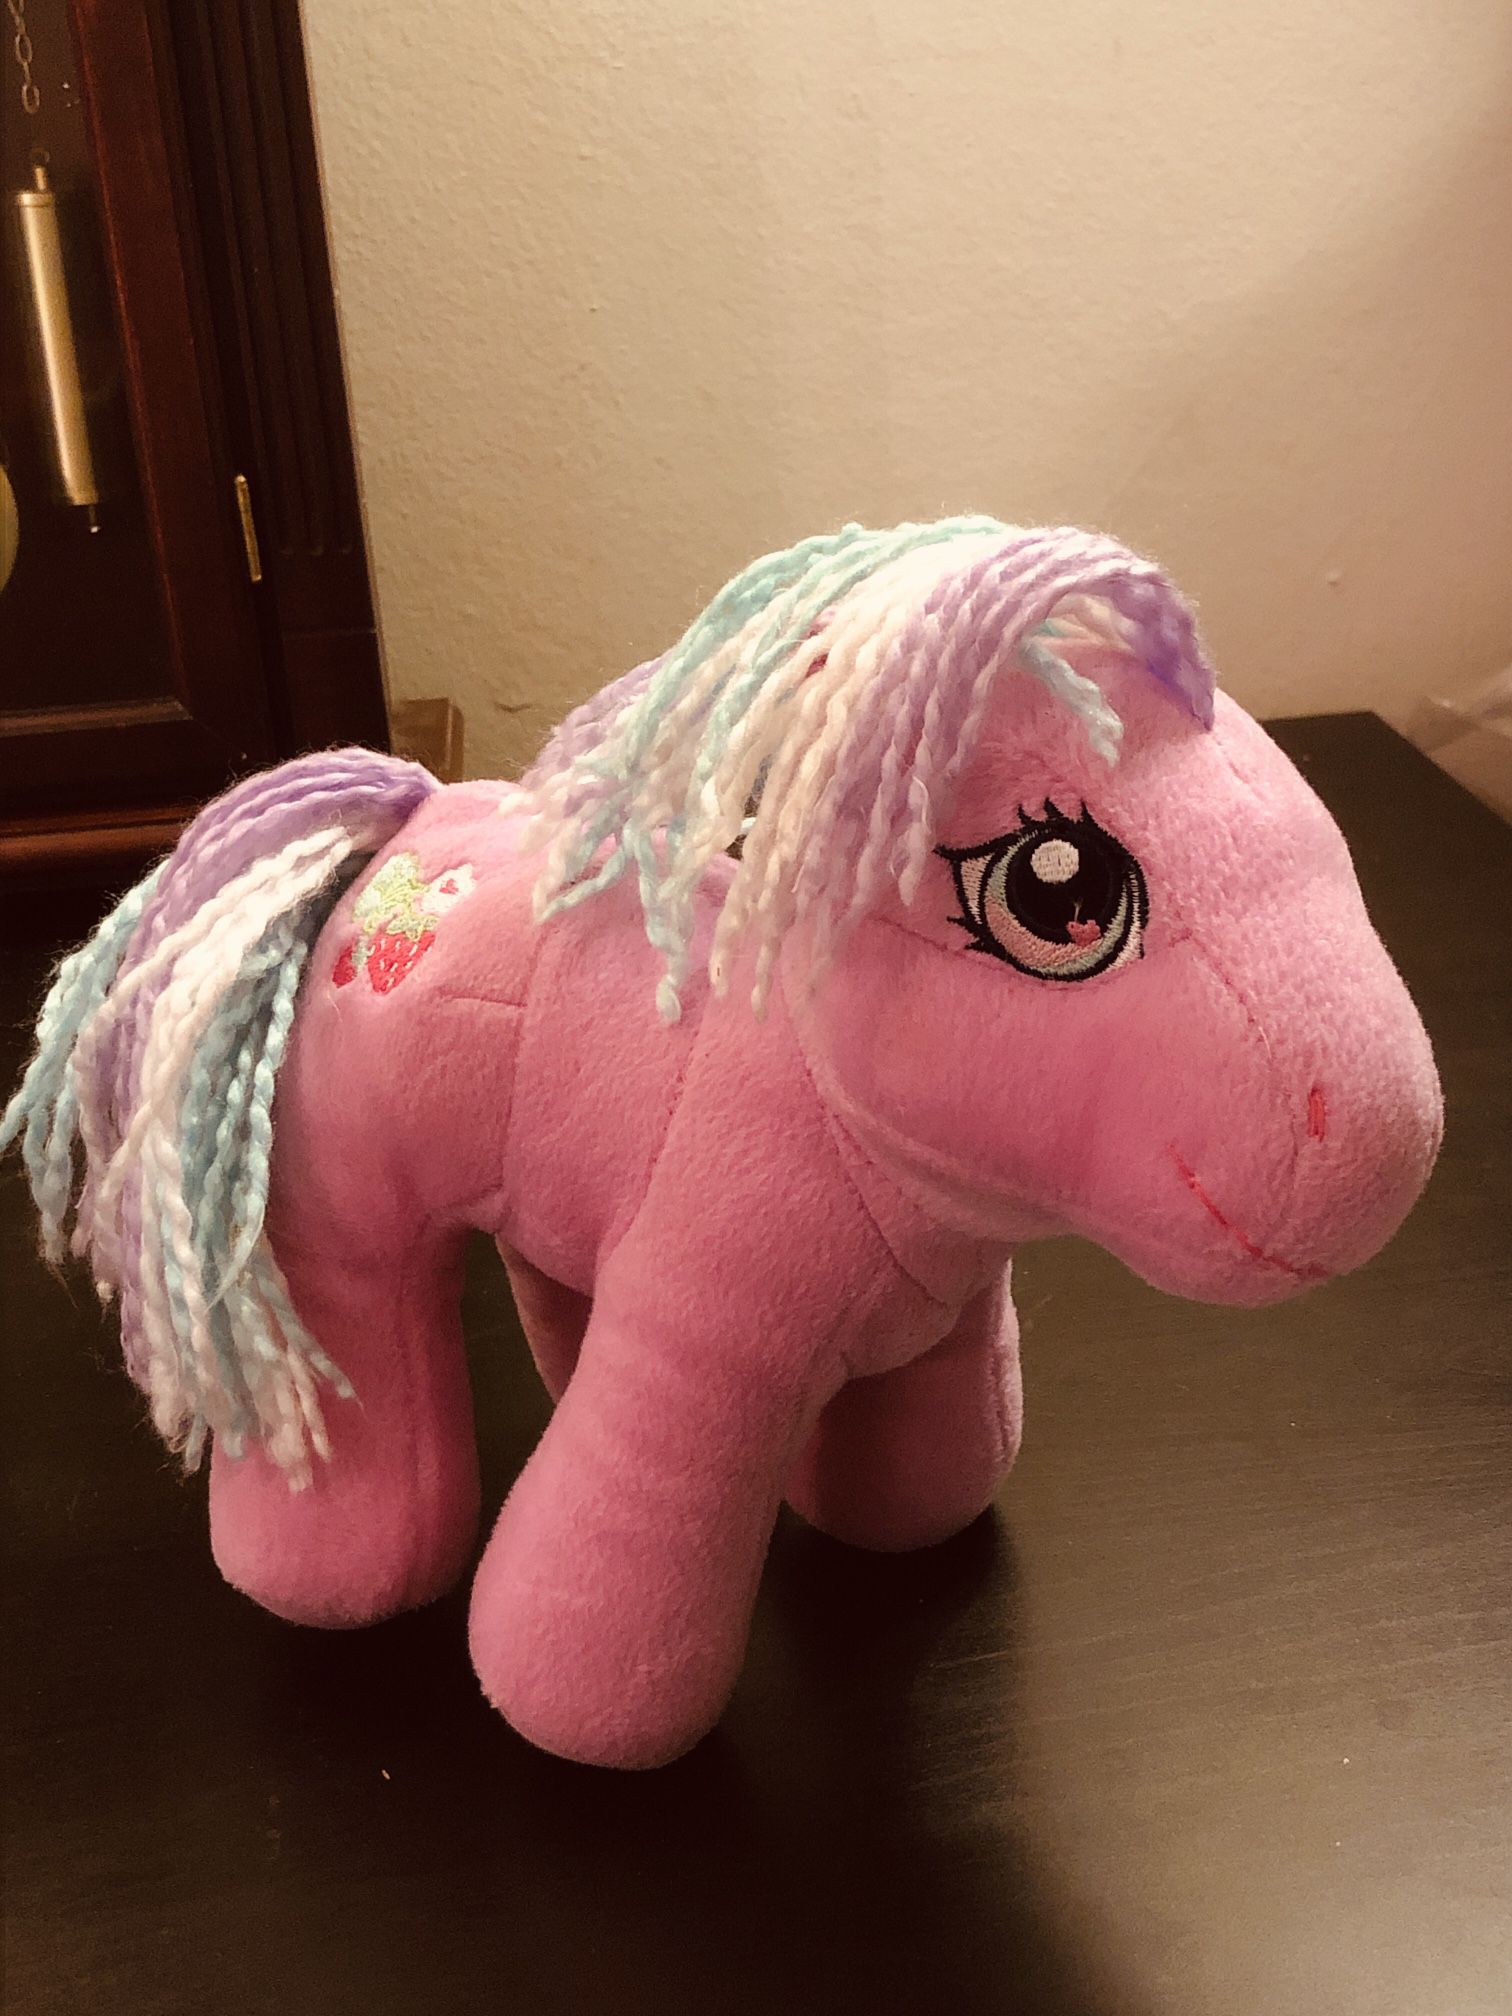 VV Early 2004 My Little Pony, Strawberry Symbol, Pink Body, 9", Plush, Soft, Toy, Figure, Vintage Plush, Stuffed Animal, 